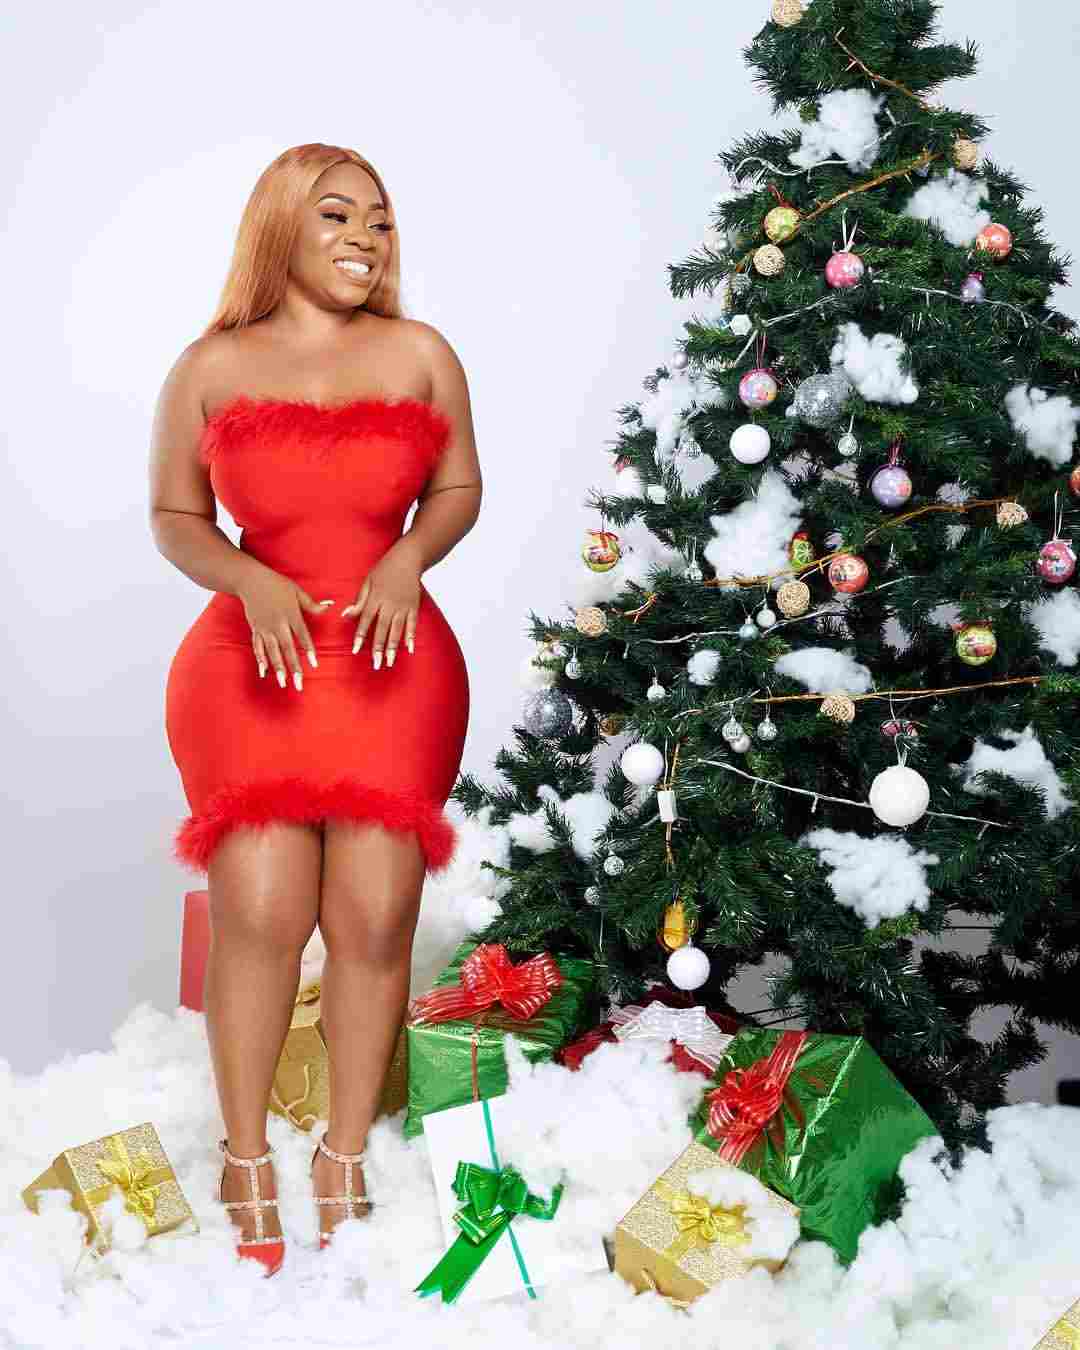 Actress Moesha posing with a Christmas tree